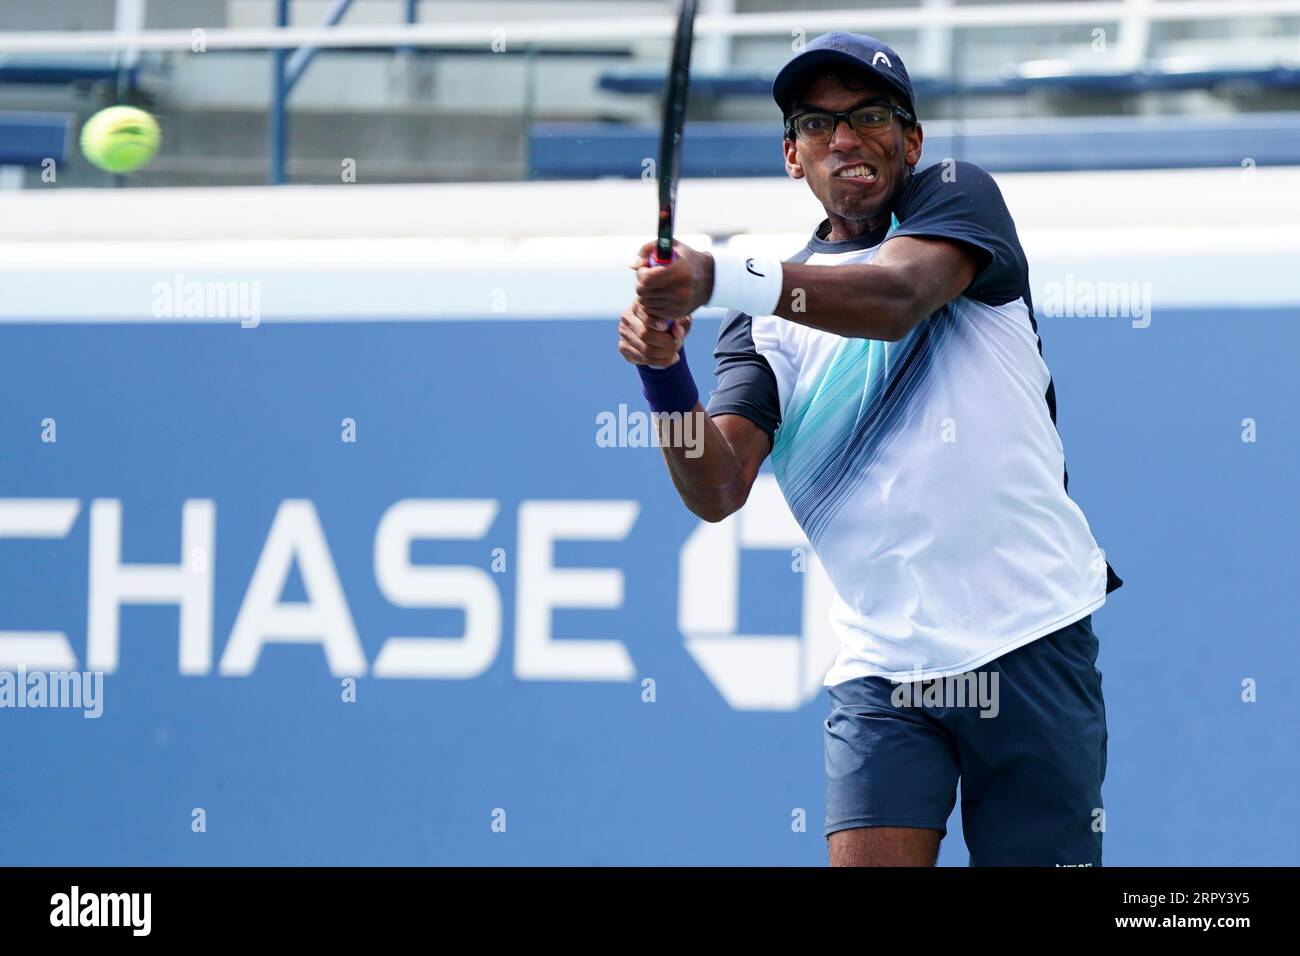 Nishesh Basavareddy – Indian-American boy making waves in World Junior  Tennis – Indian Tennis Daily